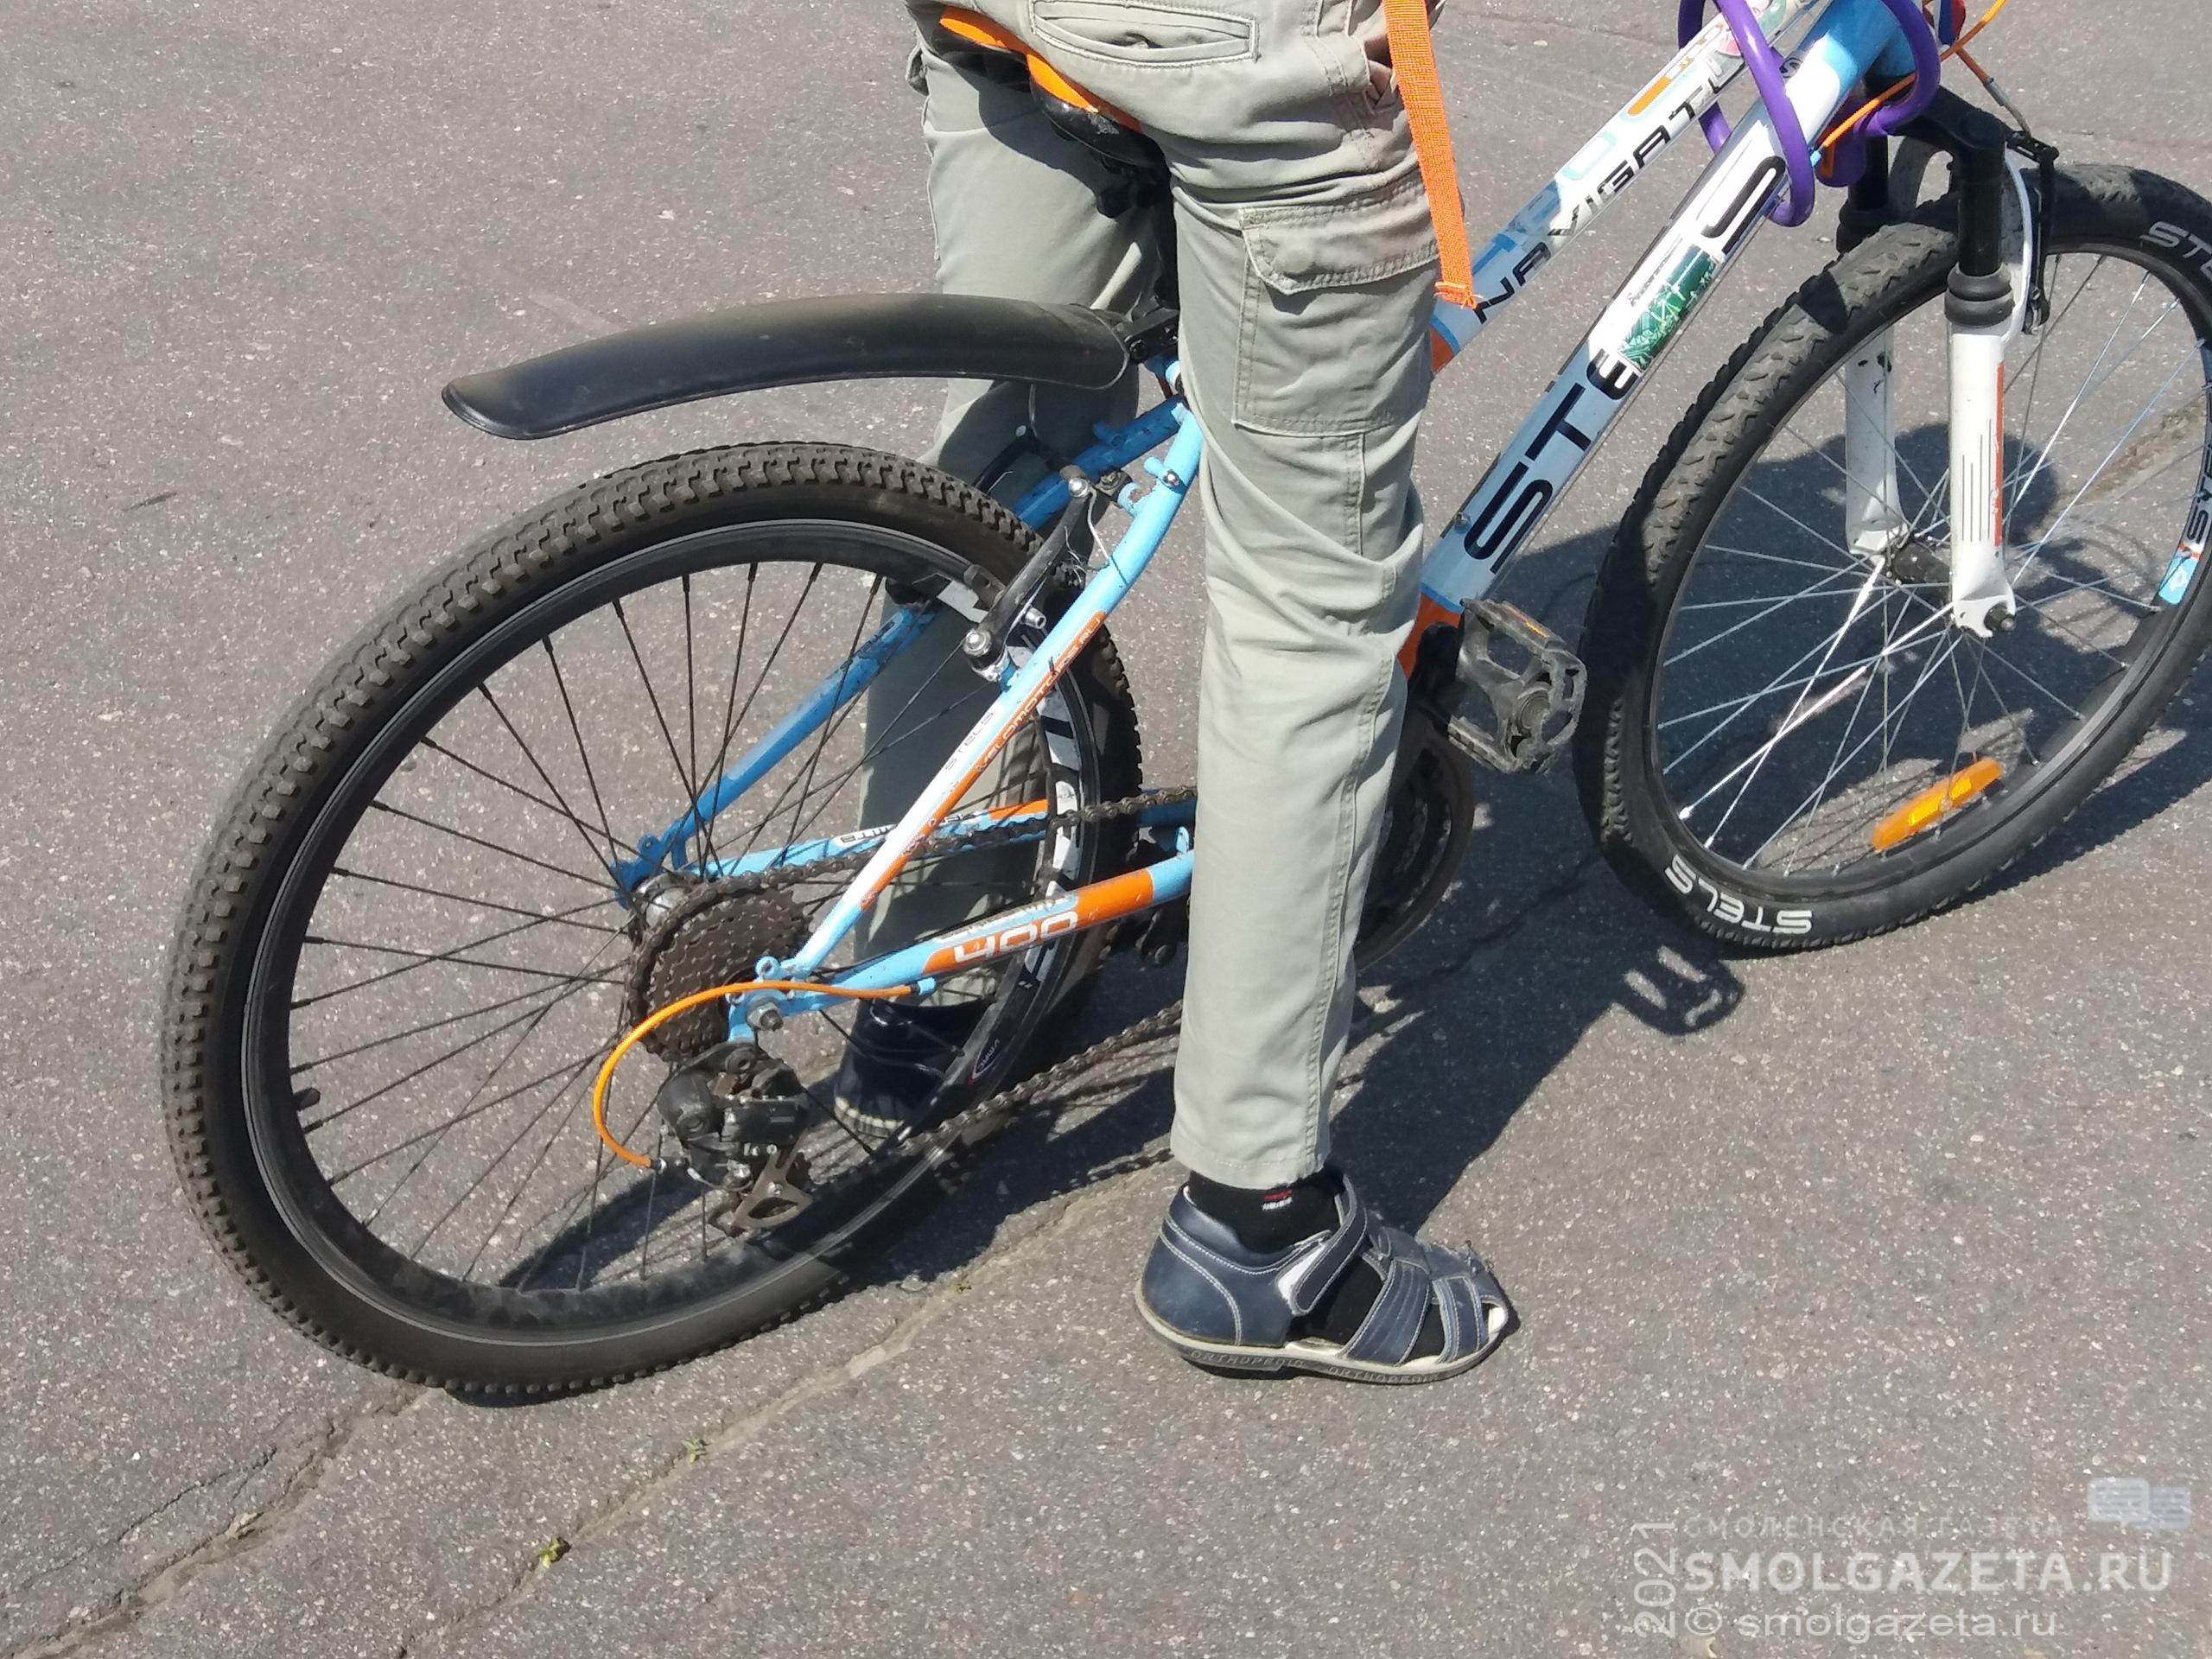 В Смоленске у дворника украли велосипед